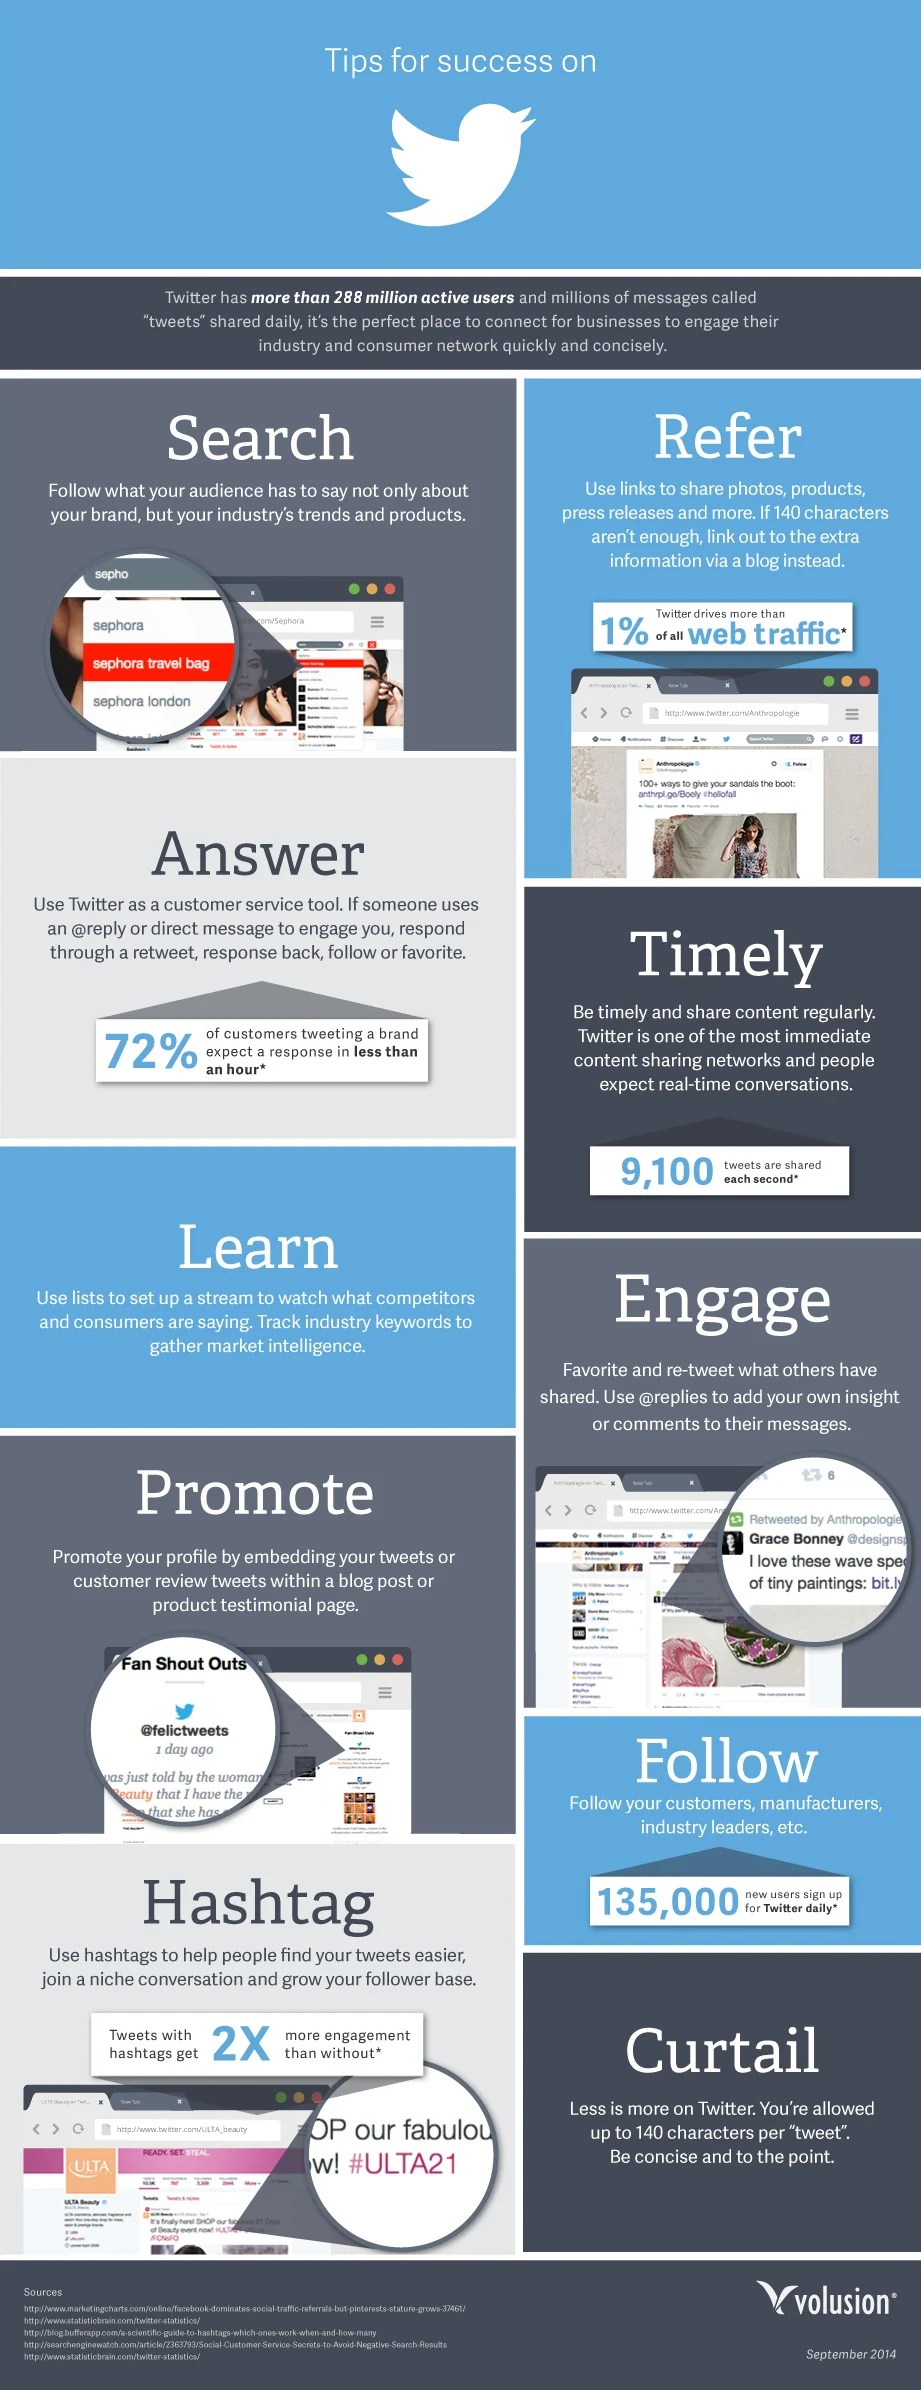 10 Strategic Ways To Increase #Twitter Engagement - #infographic #socialmedia